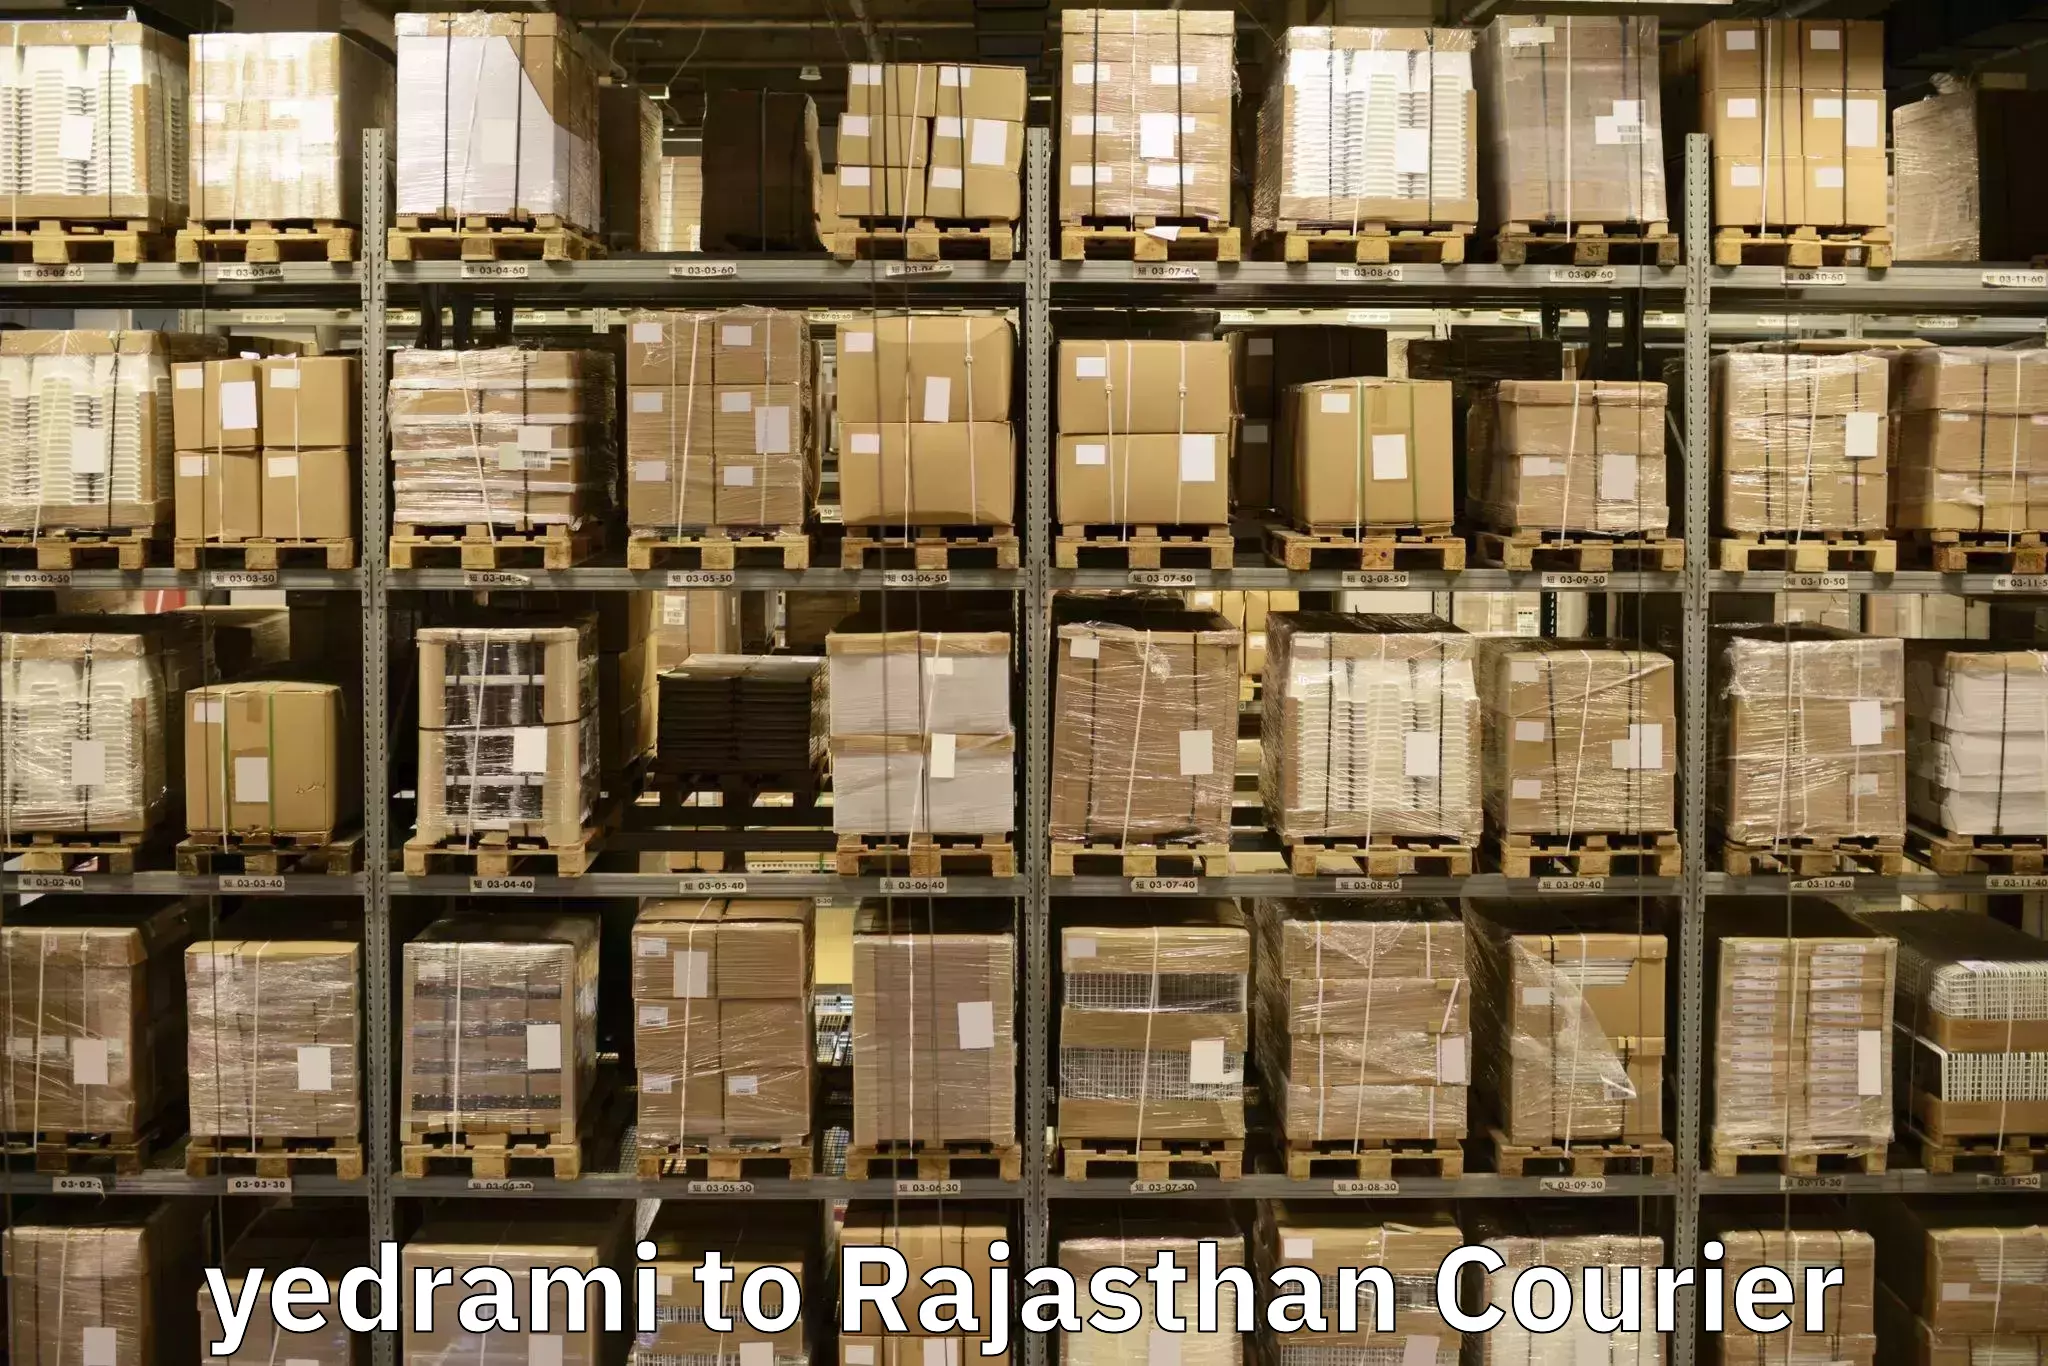 Moving and storage services yedrami to Sri Vijaynagar